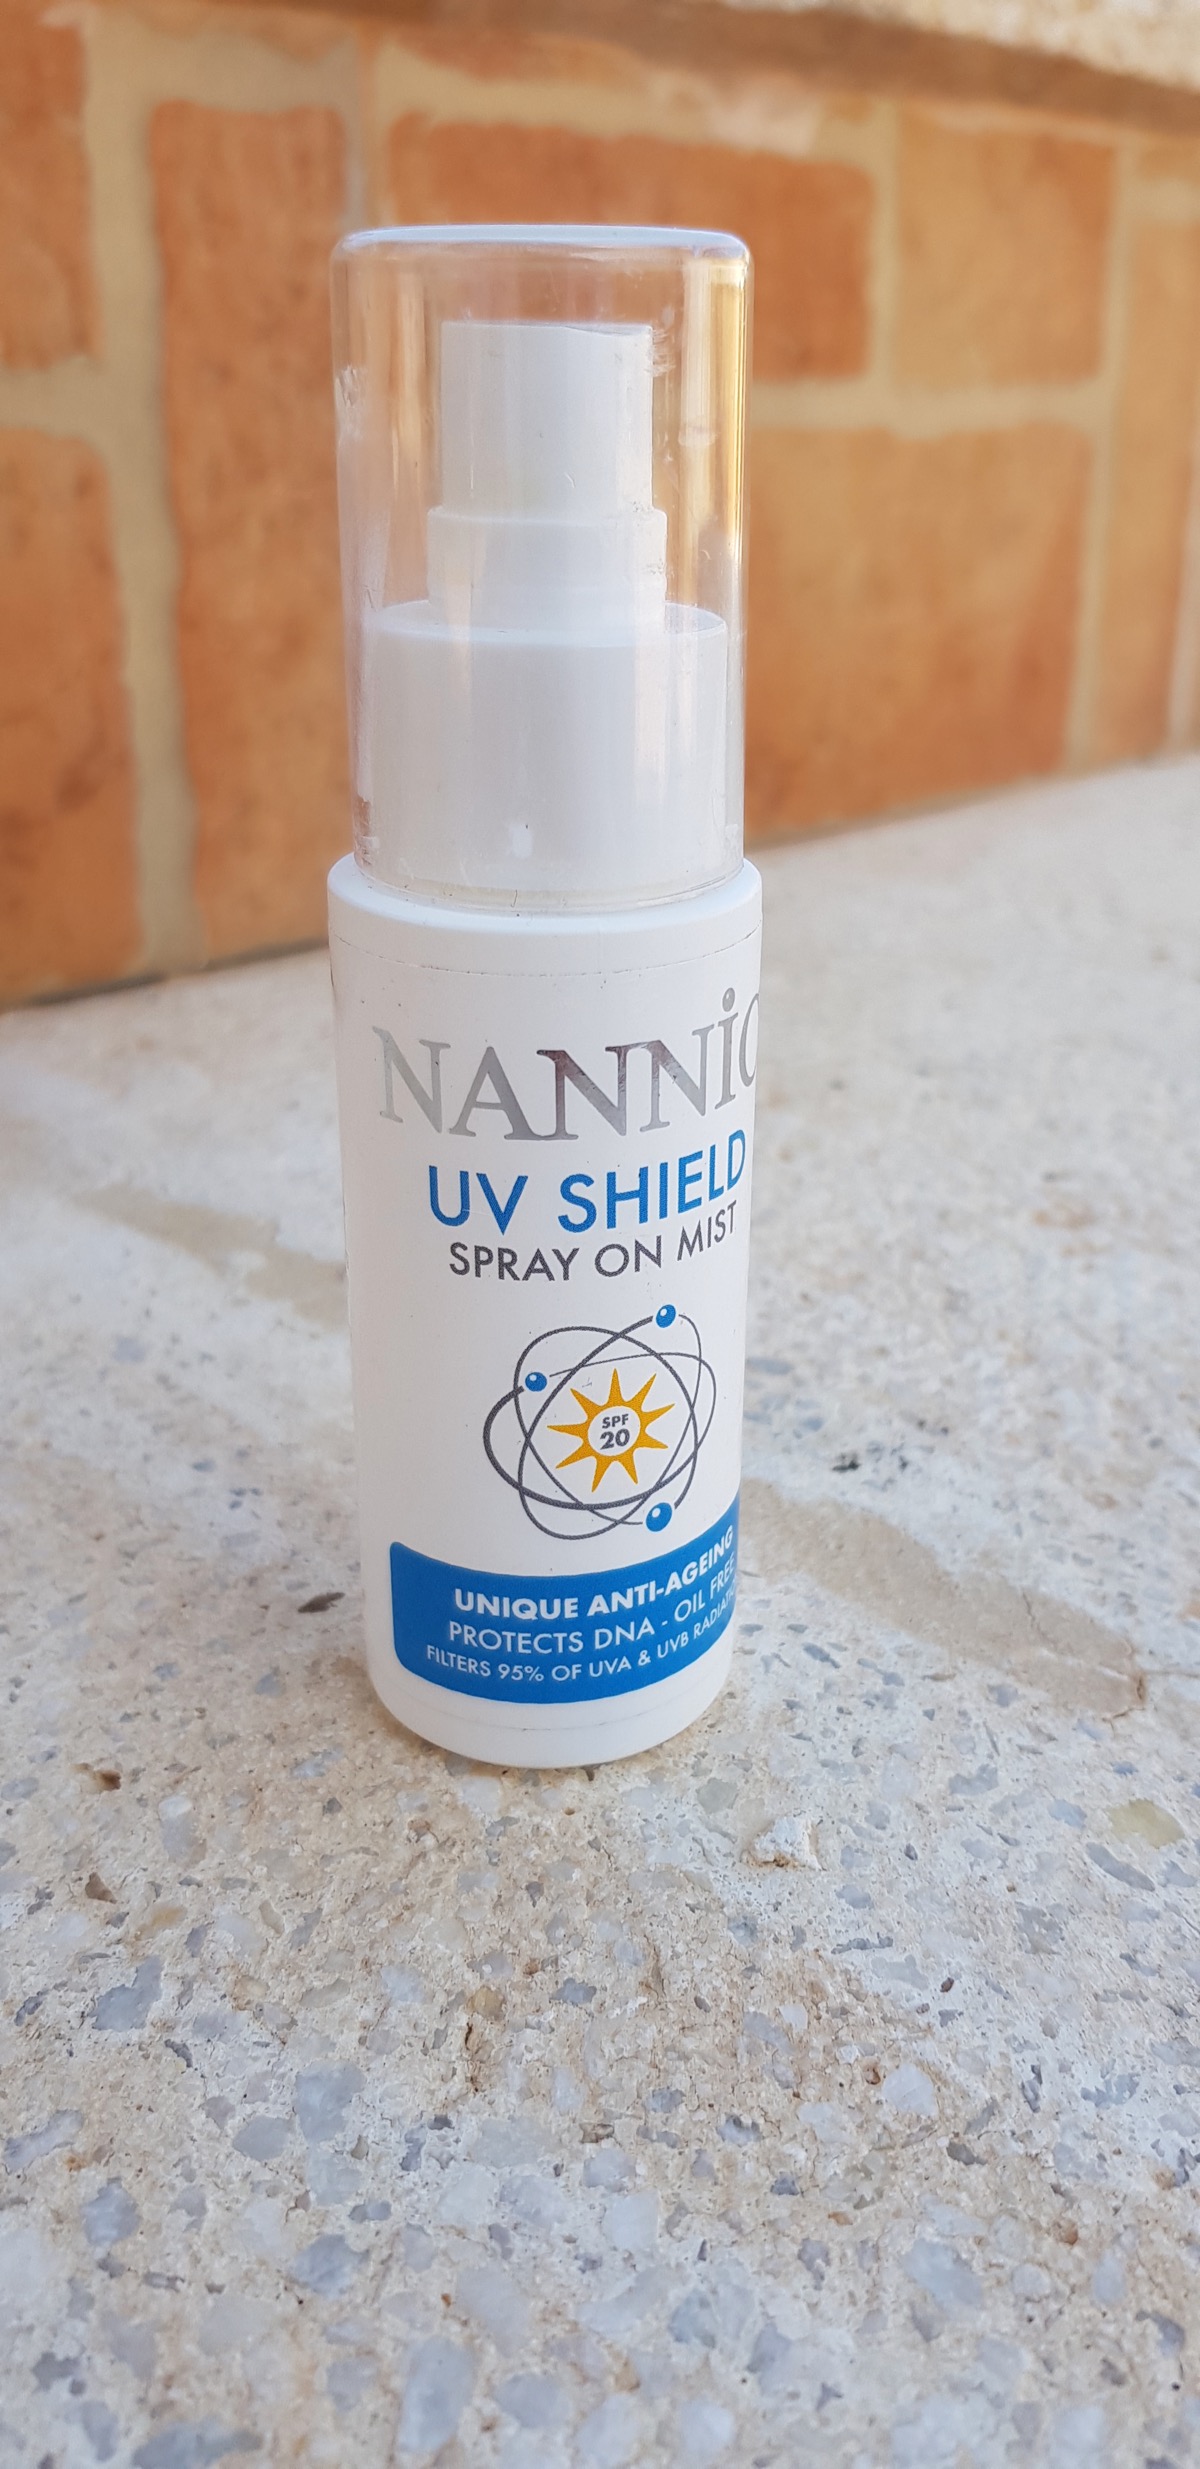 Nannic UV shield skonhetssnack.se 20180826_164432